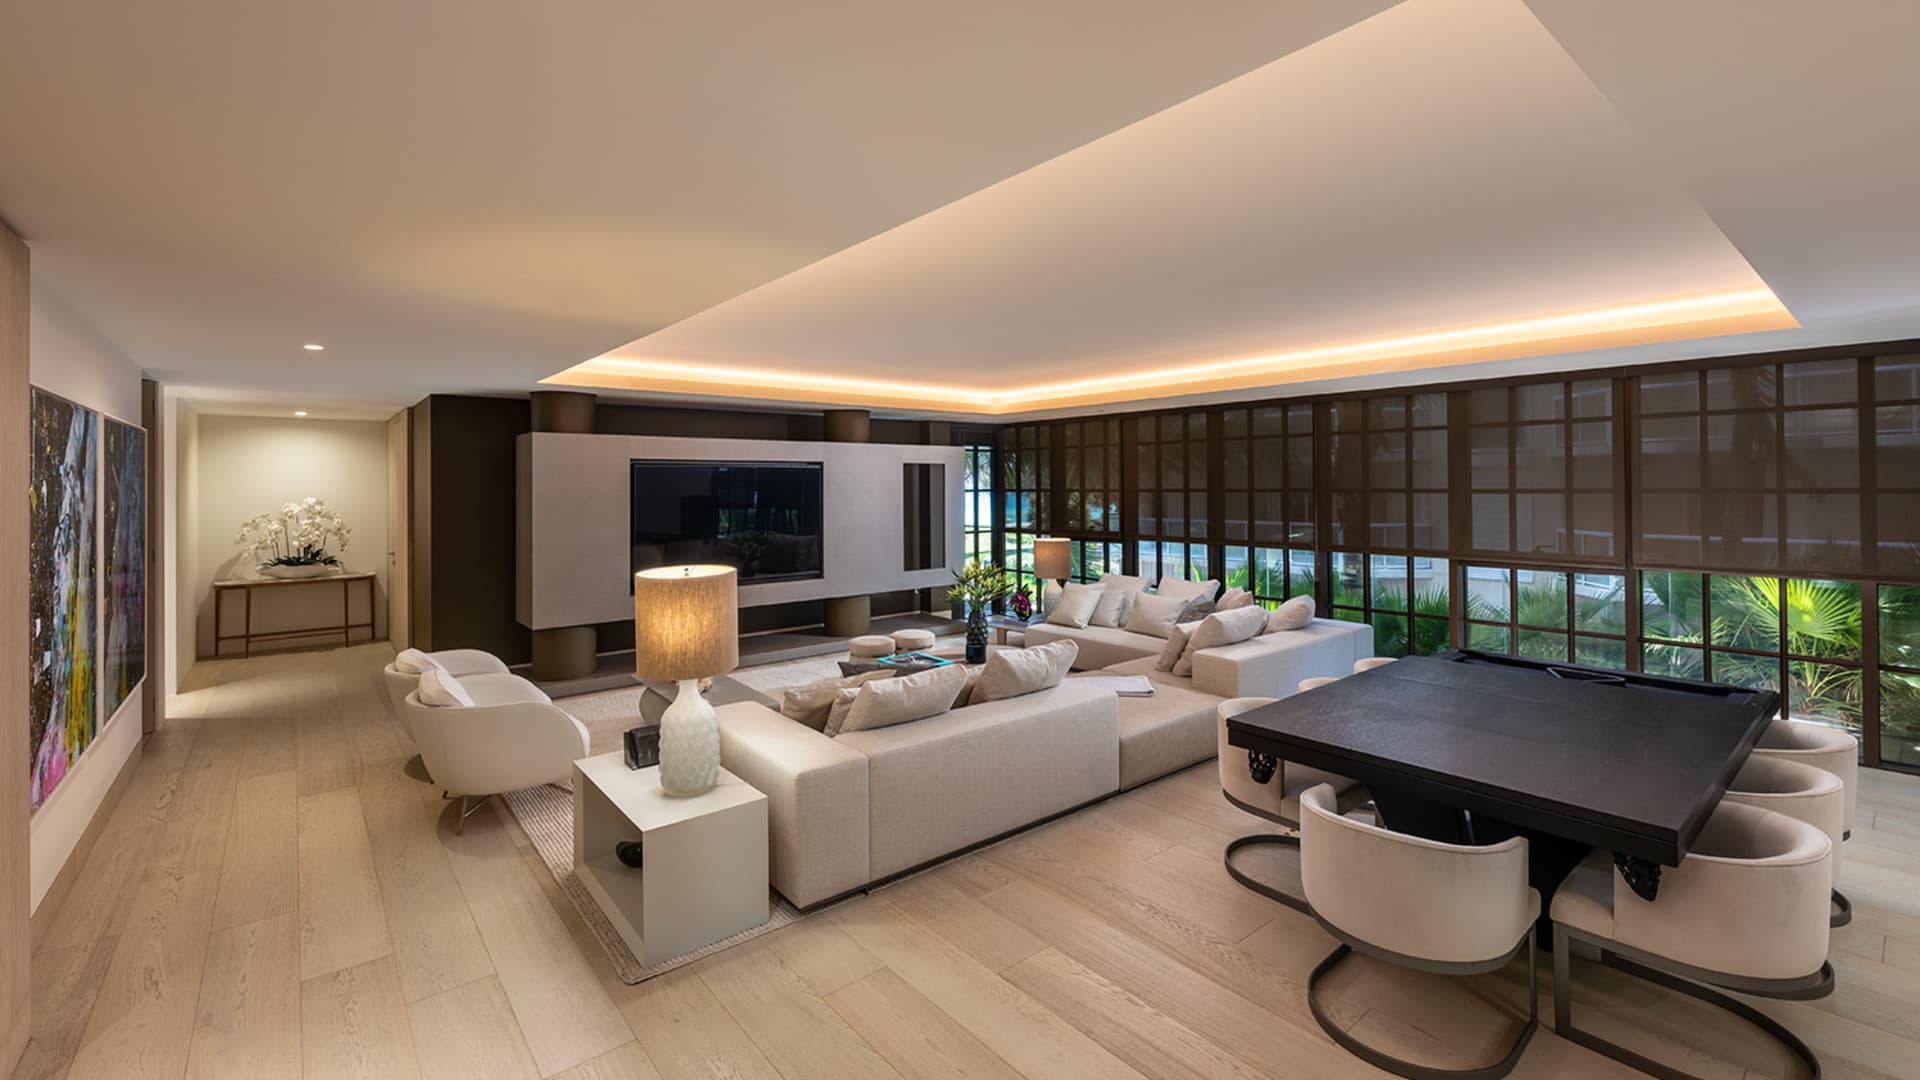 The Arte condominium in the Surfside neighborhood of Miami Beach features 16 luxury units.